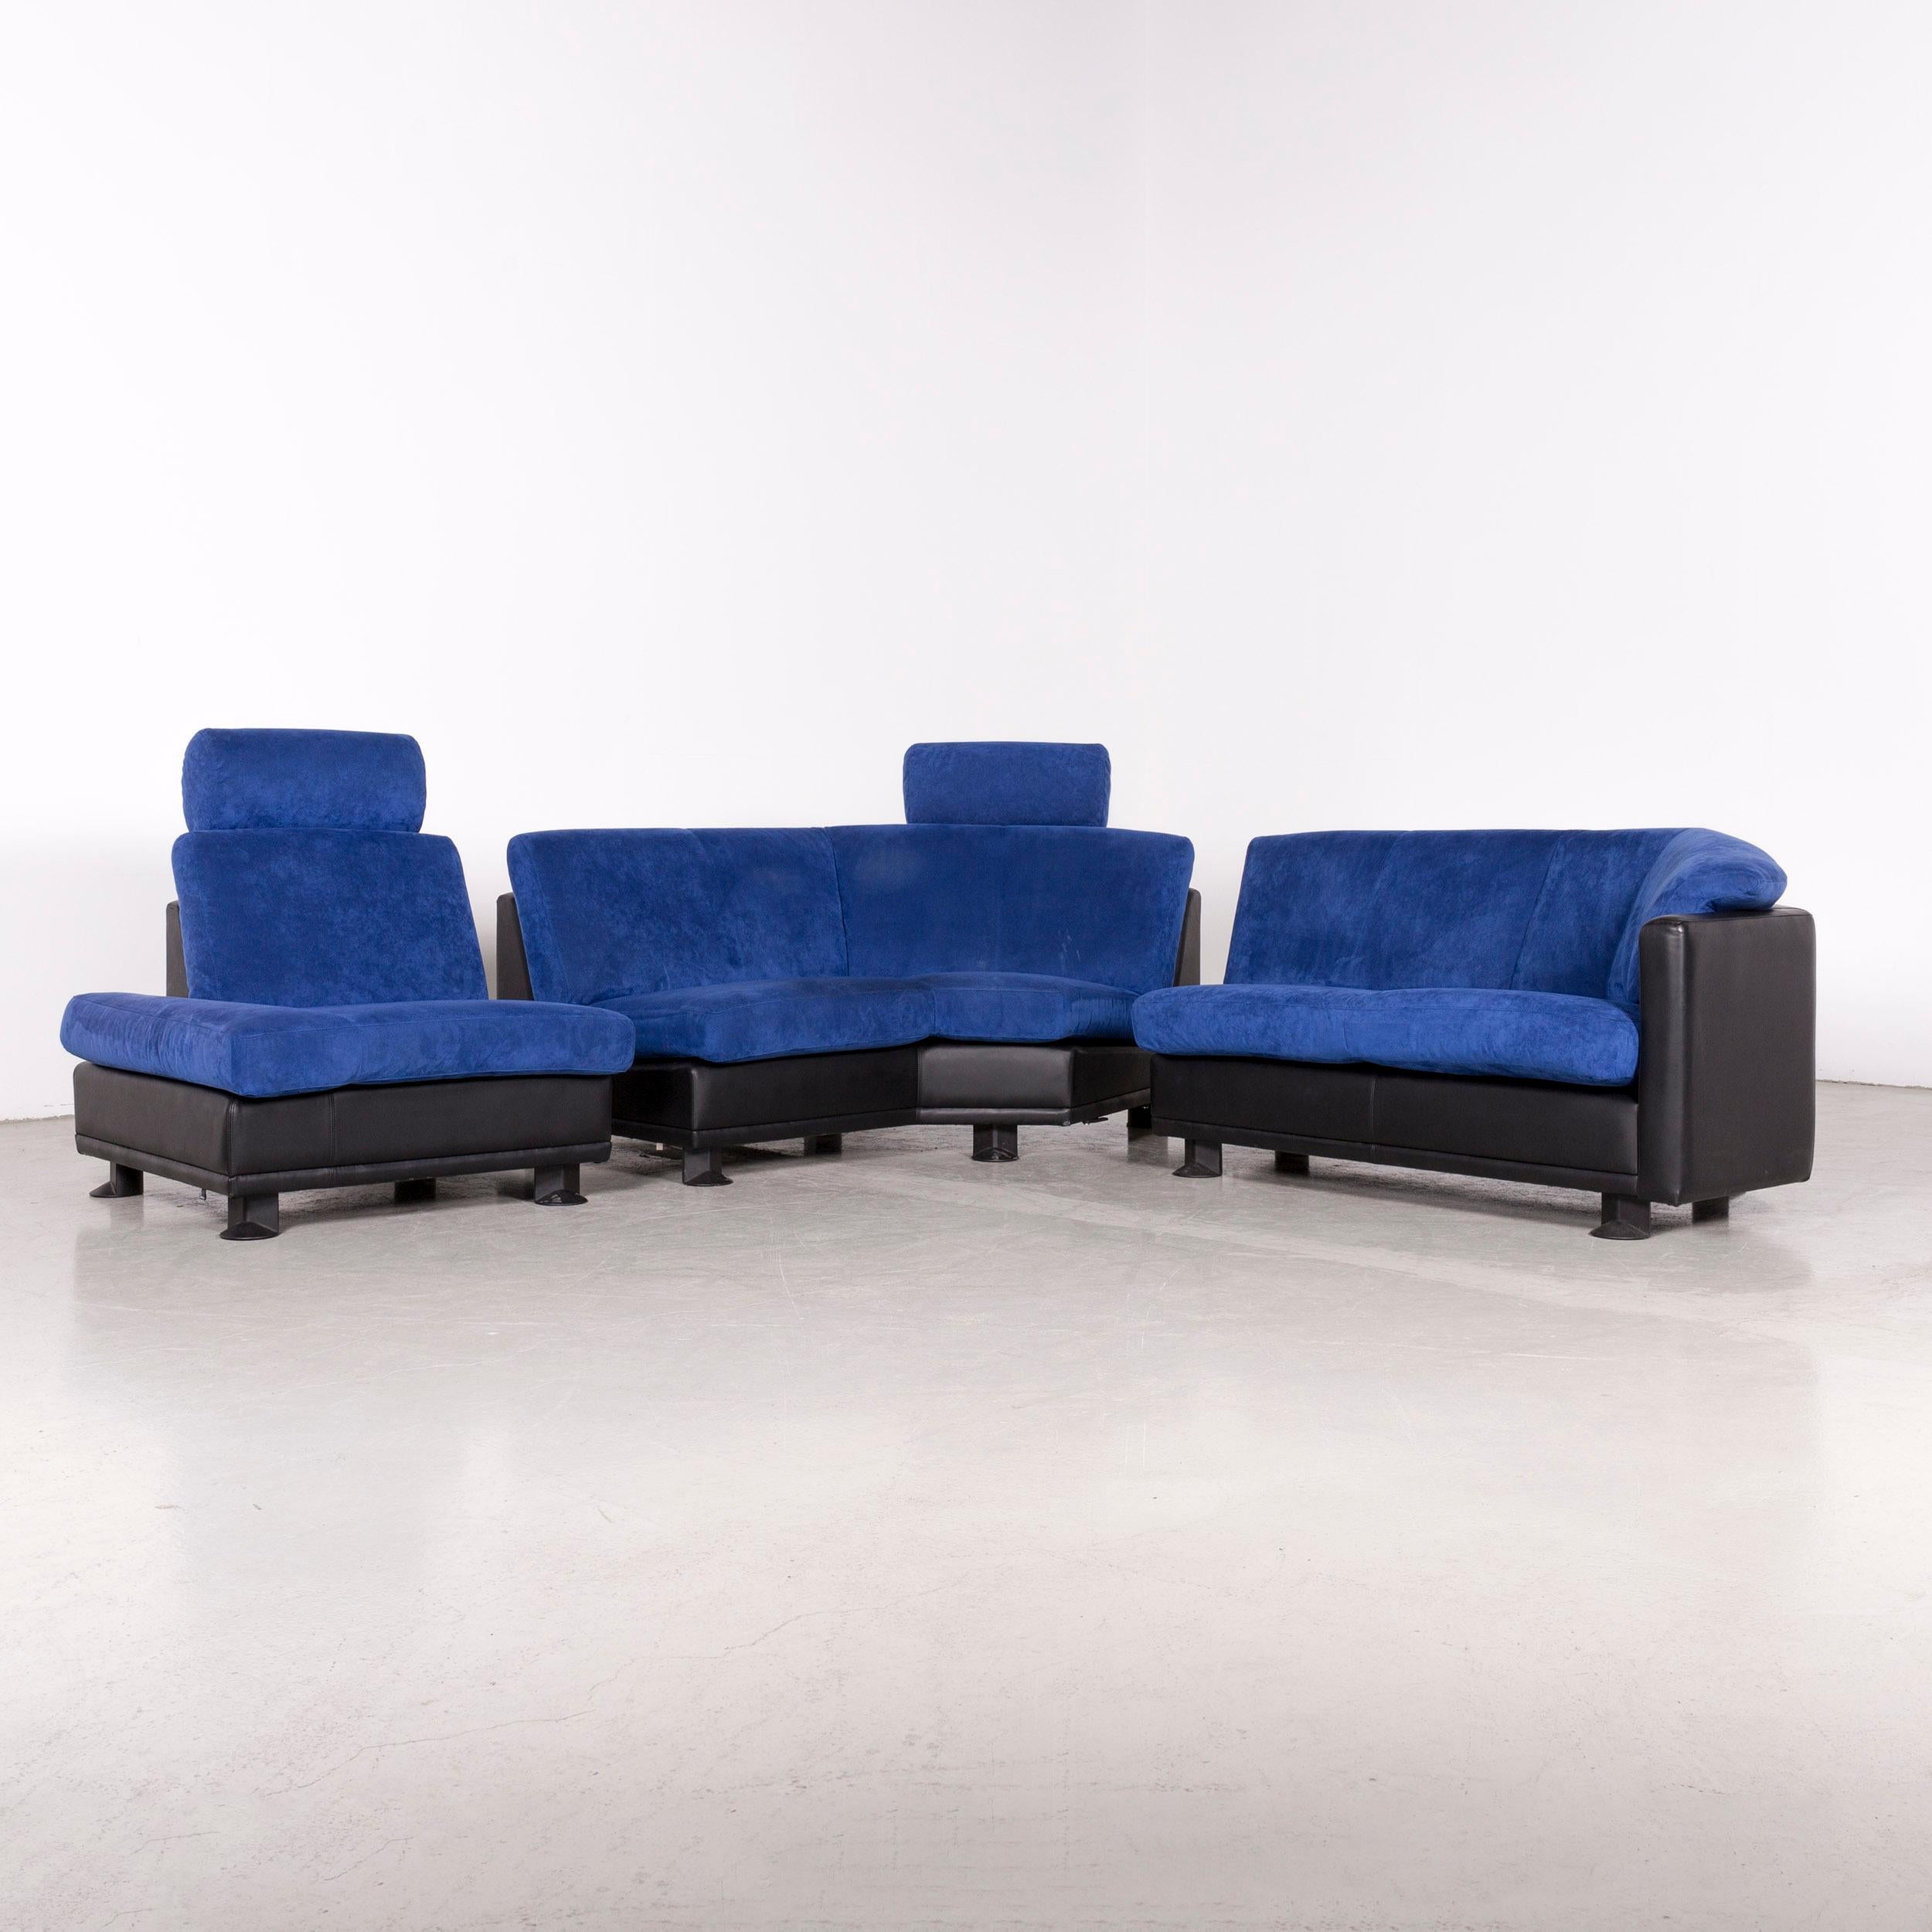 Leolux Antipode Designer Fabric Corner Couch Blue Sofa In Good Condition For Sale In Cologne, DE